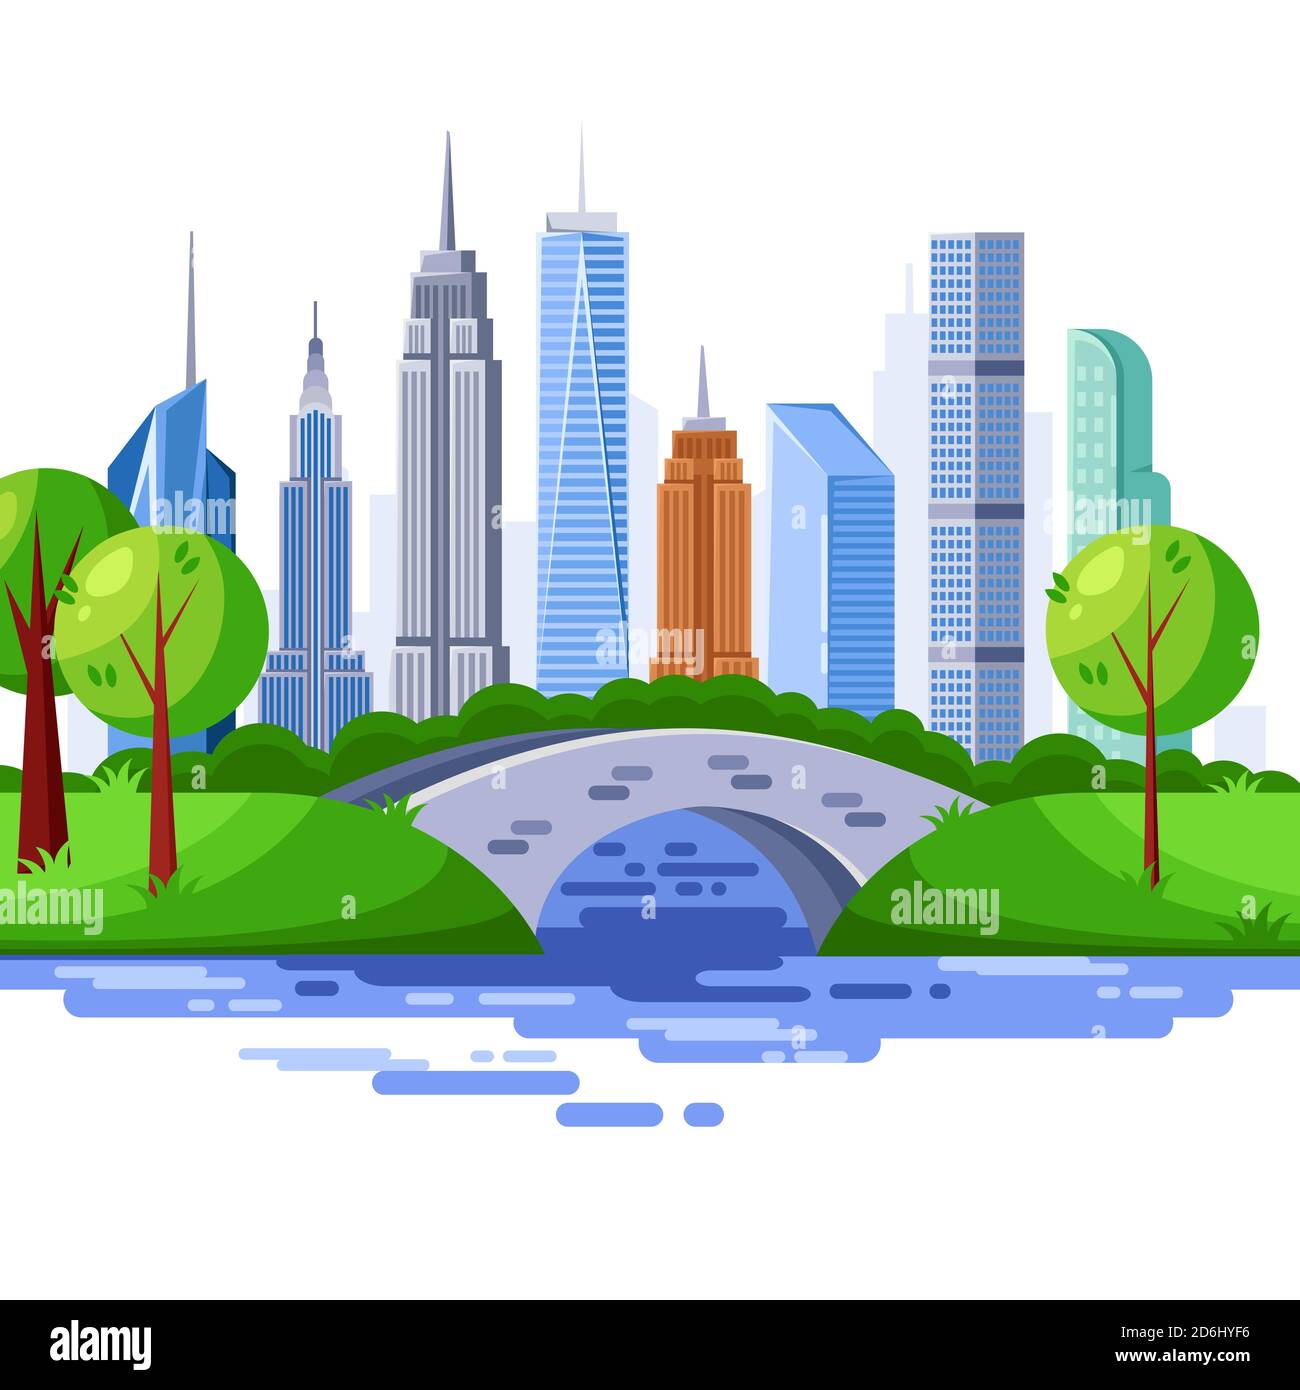 New York central park and urban skyscraper buildings. Vector cityscape illustration. Stock Vector